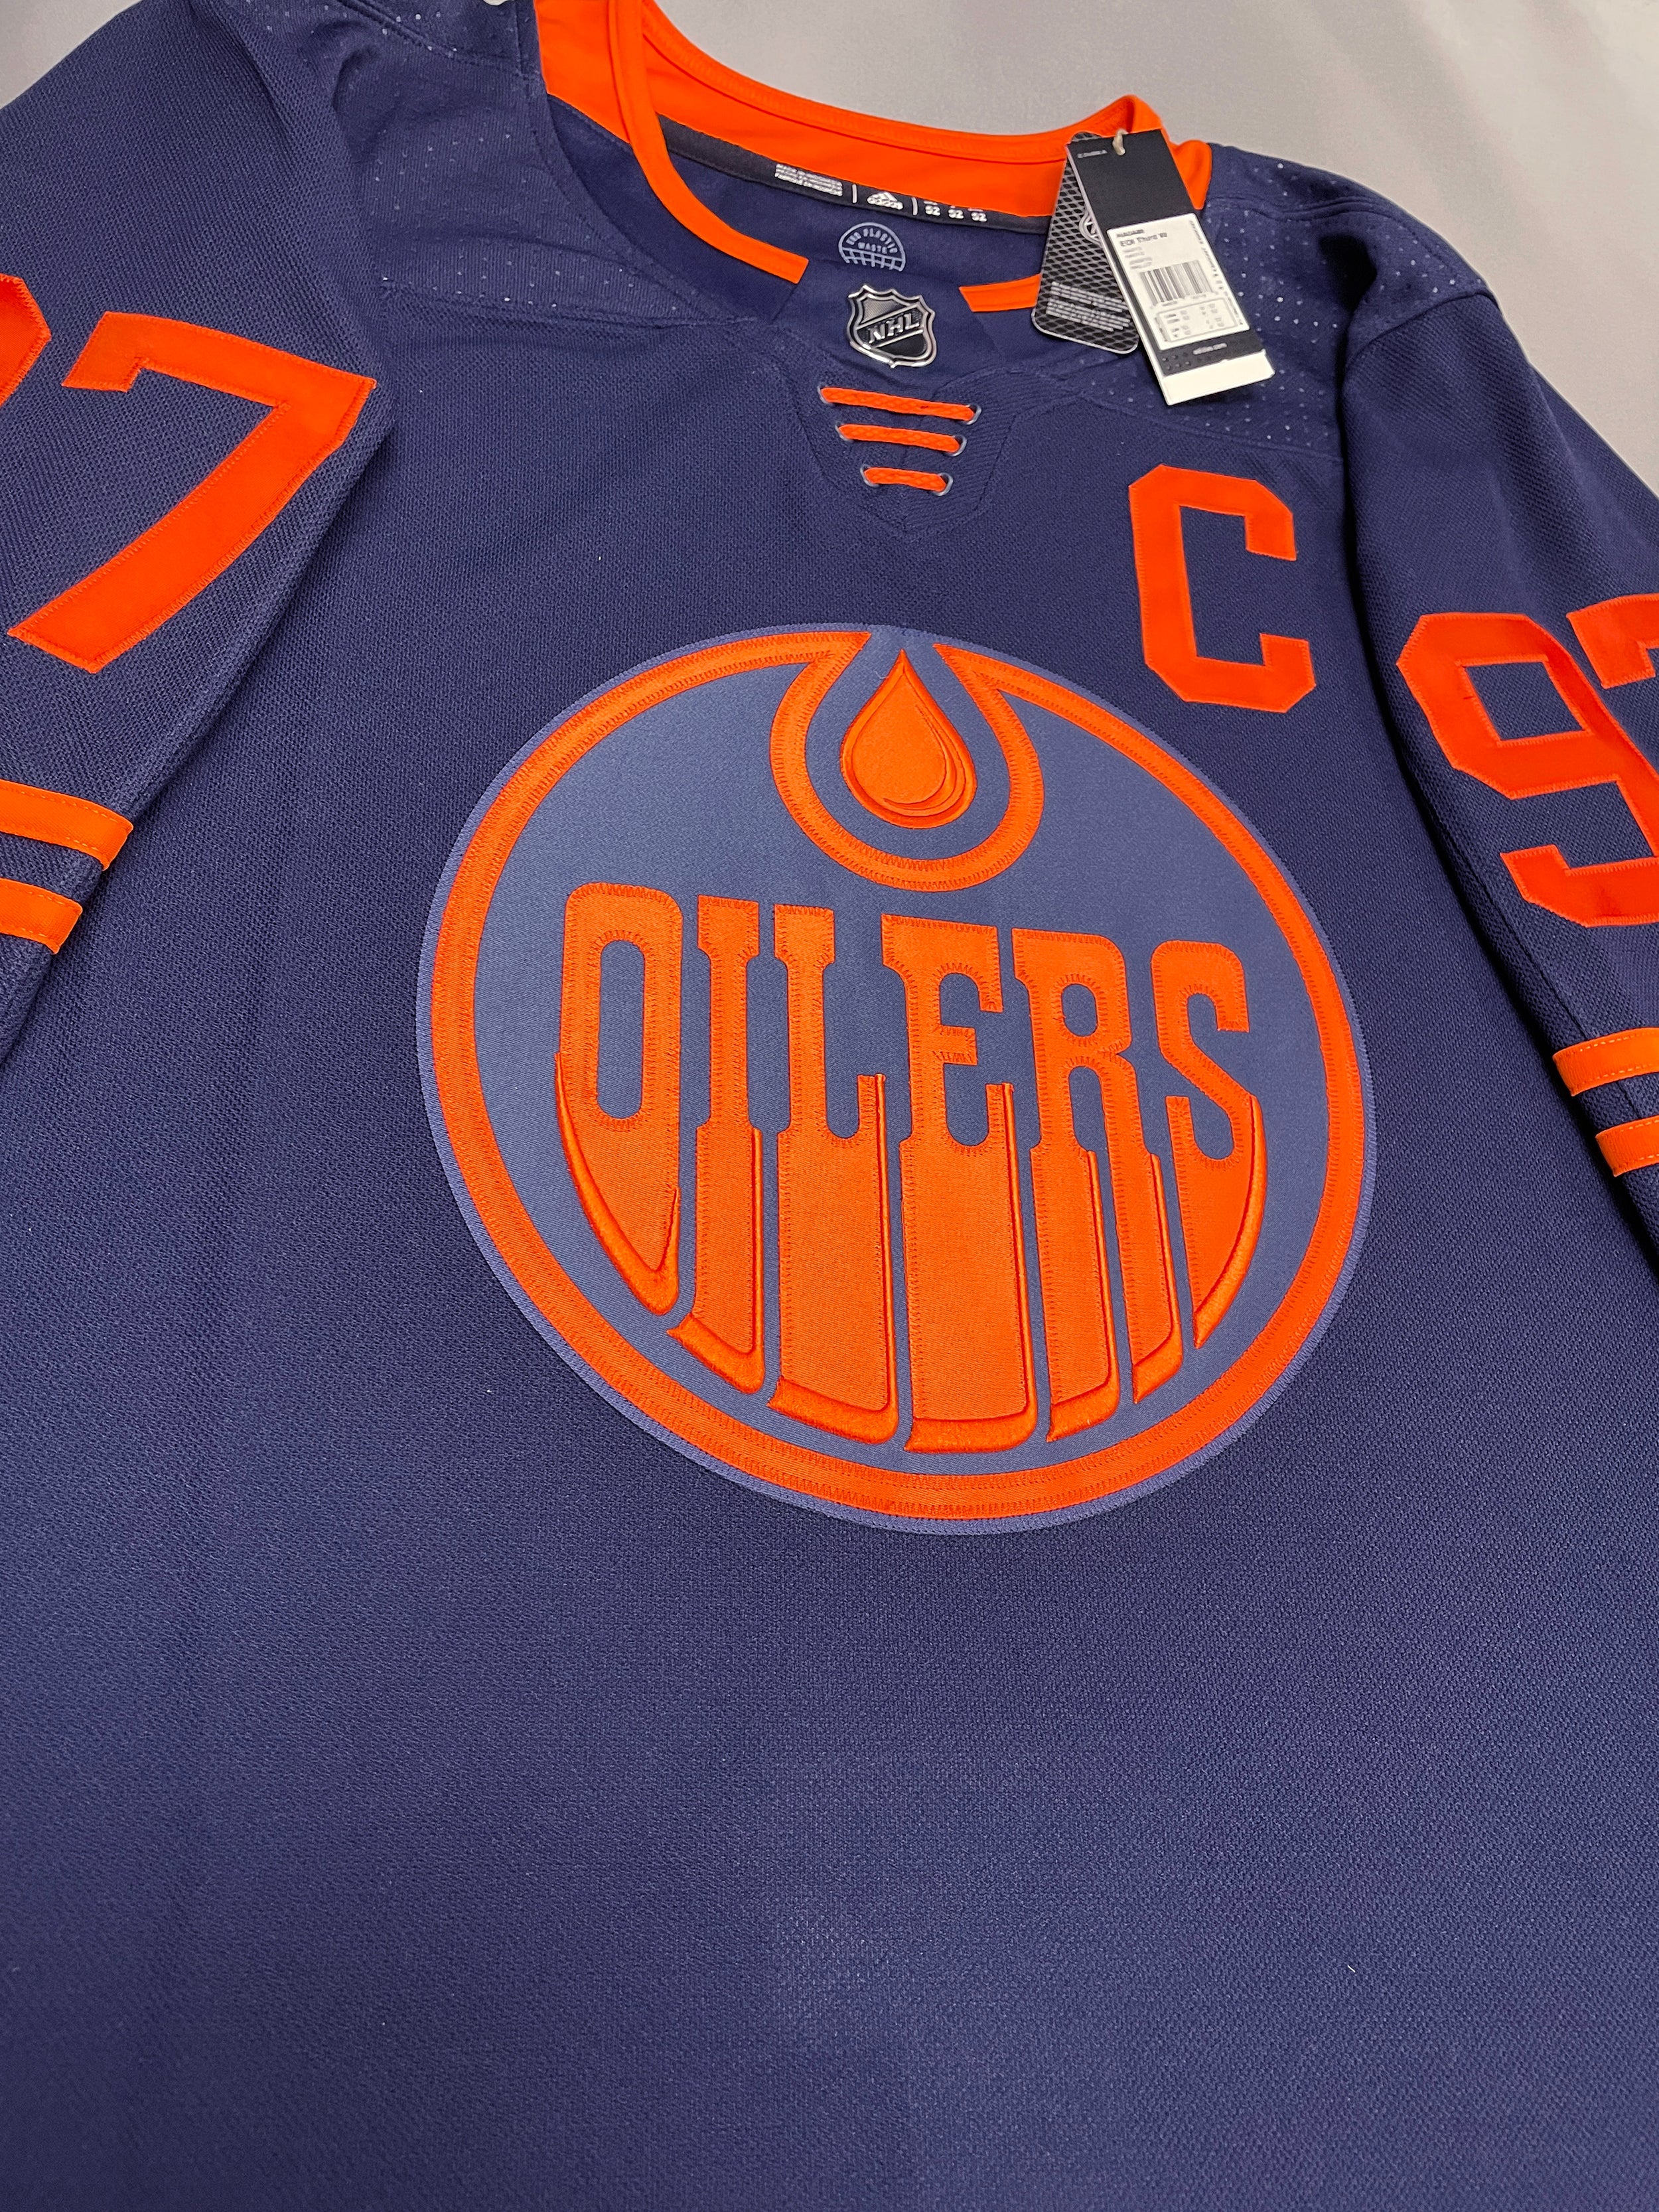 Connor McDavid Edmonton Oilers 2022 Adidas Primegreen Authentic NHL Hockey Jersey - Home / M/50